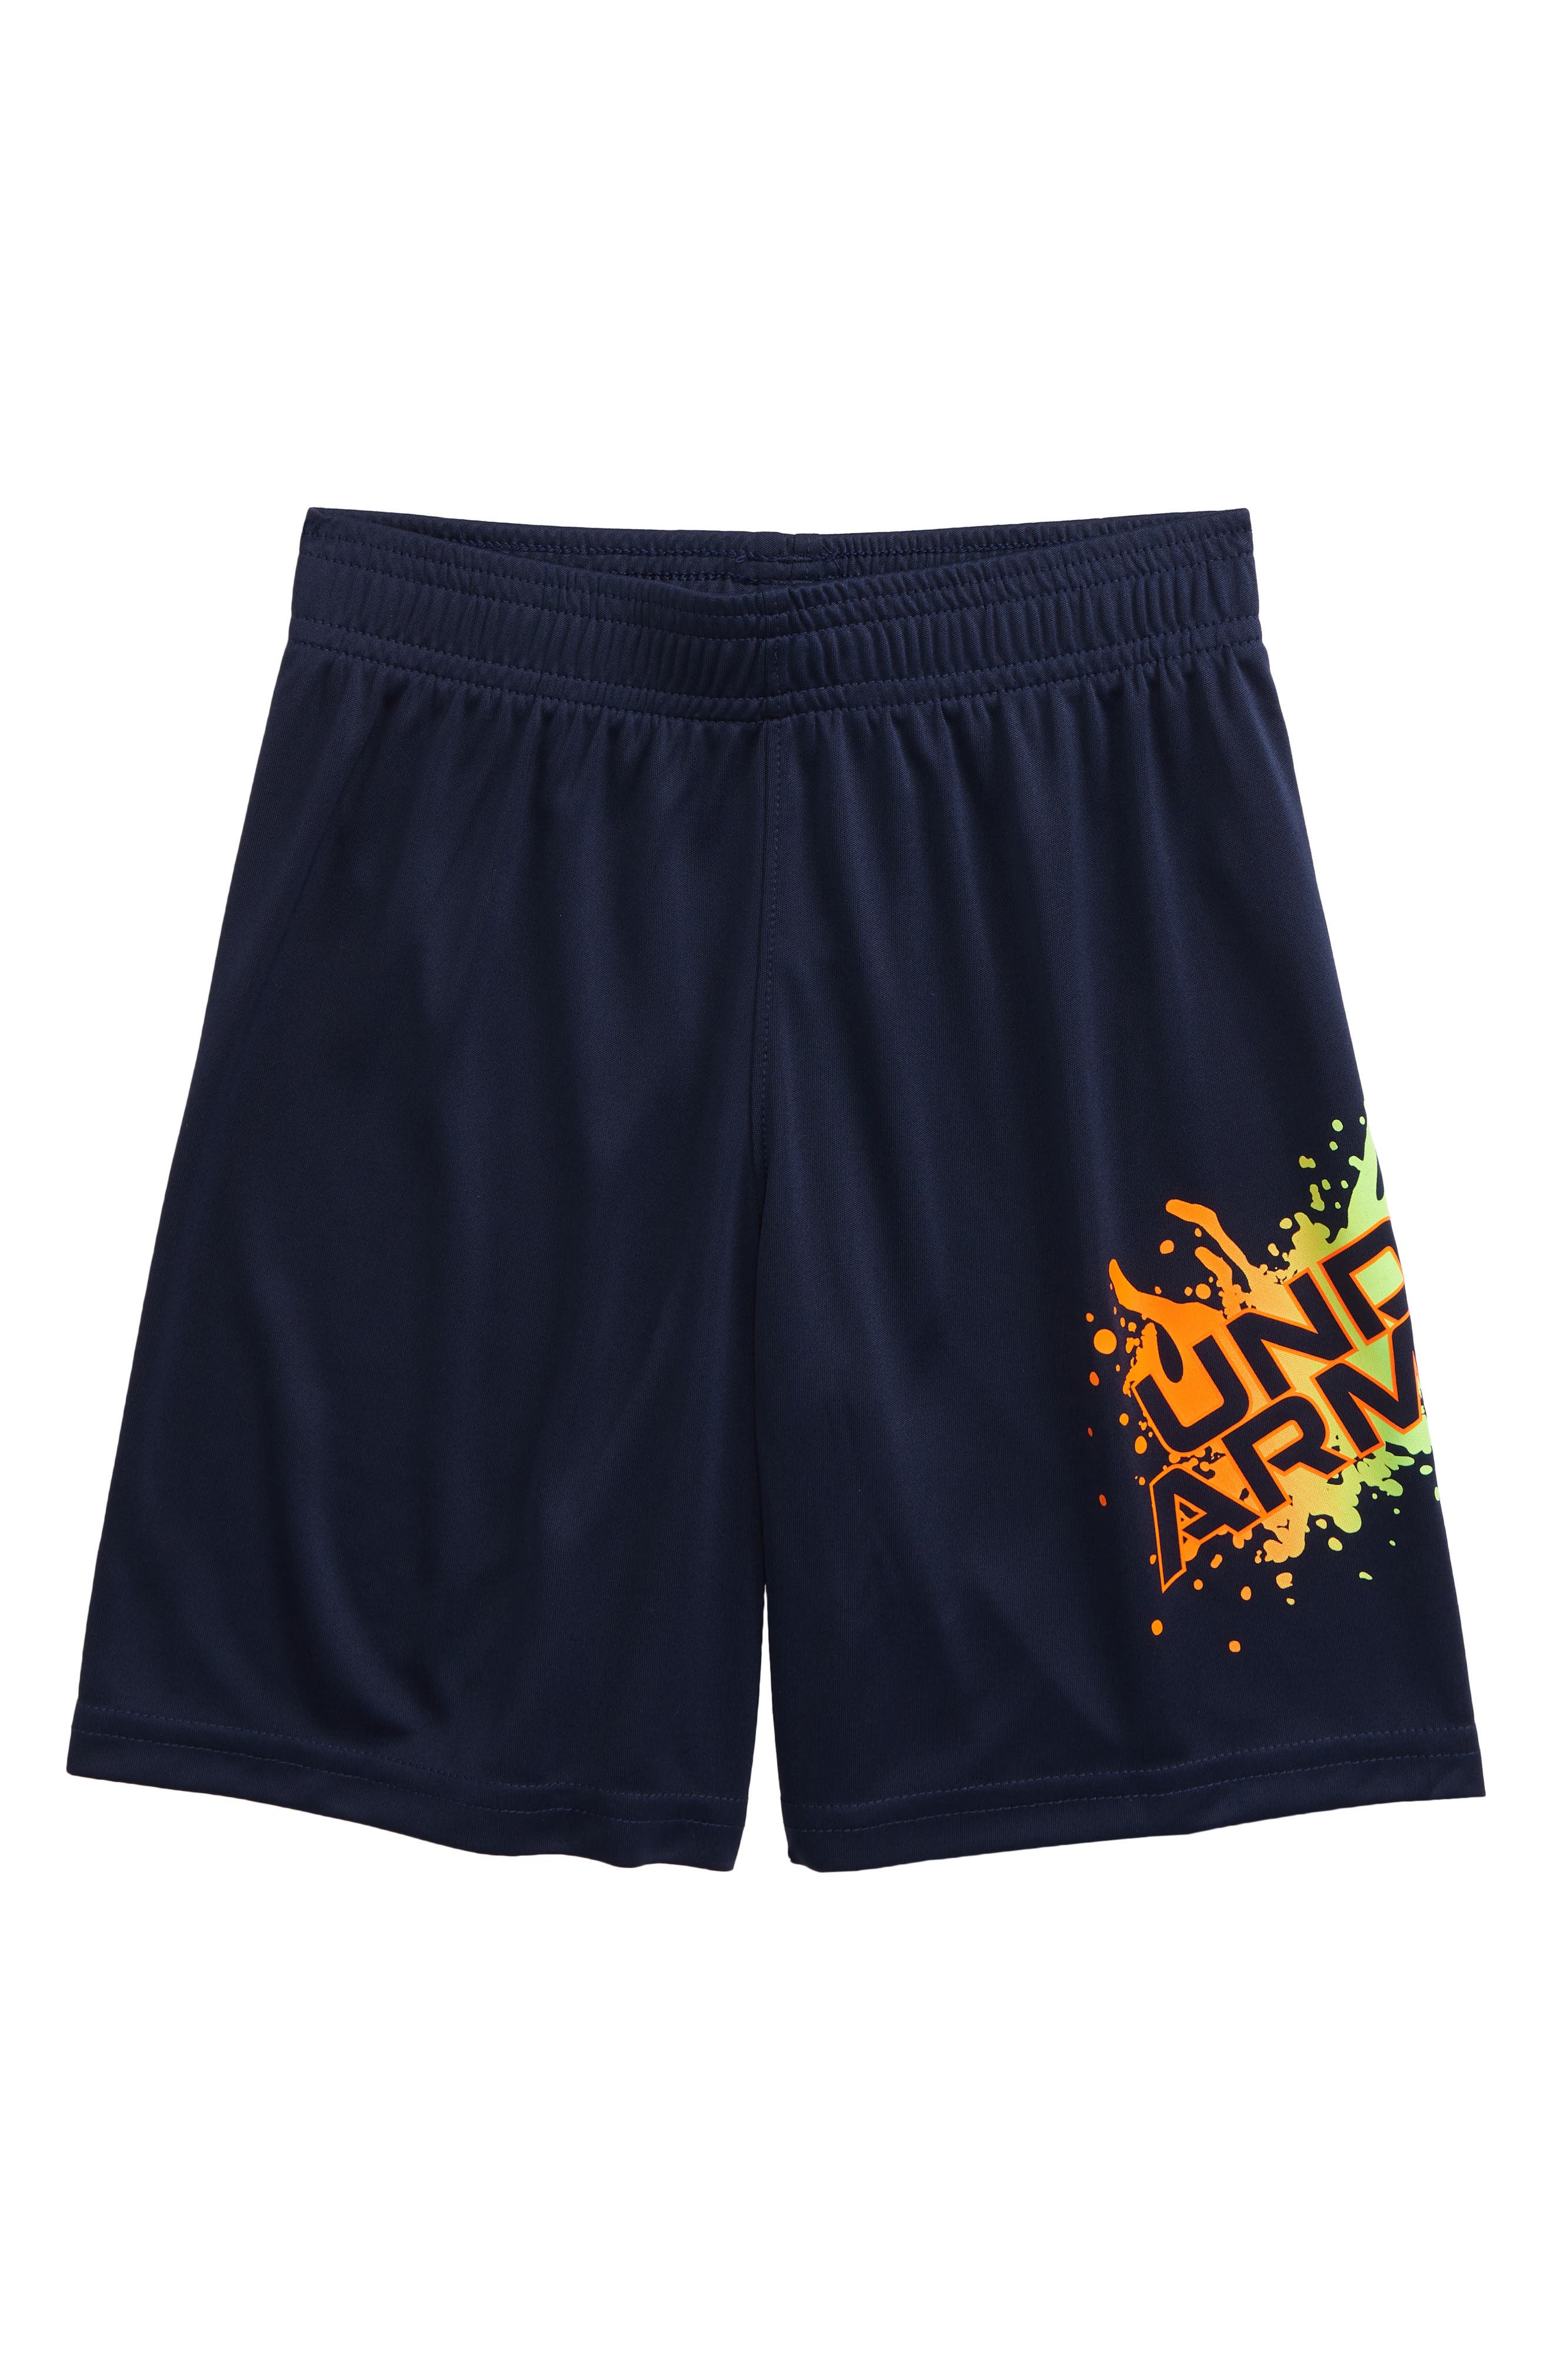 Details about   Under Armour Shorts Little Boys Athletic Sports Short Pants UA Bottoms NWT 